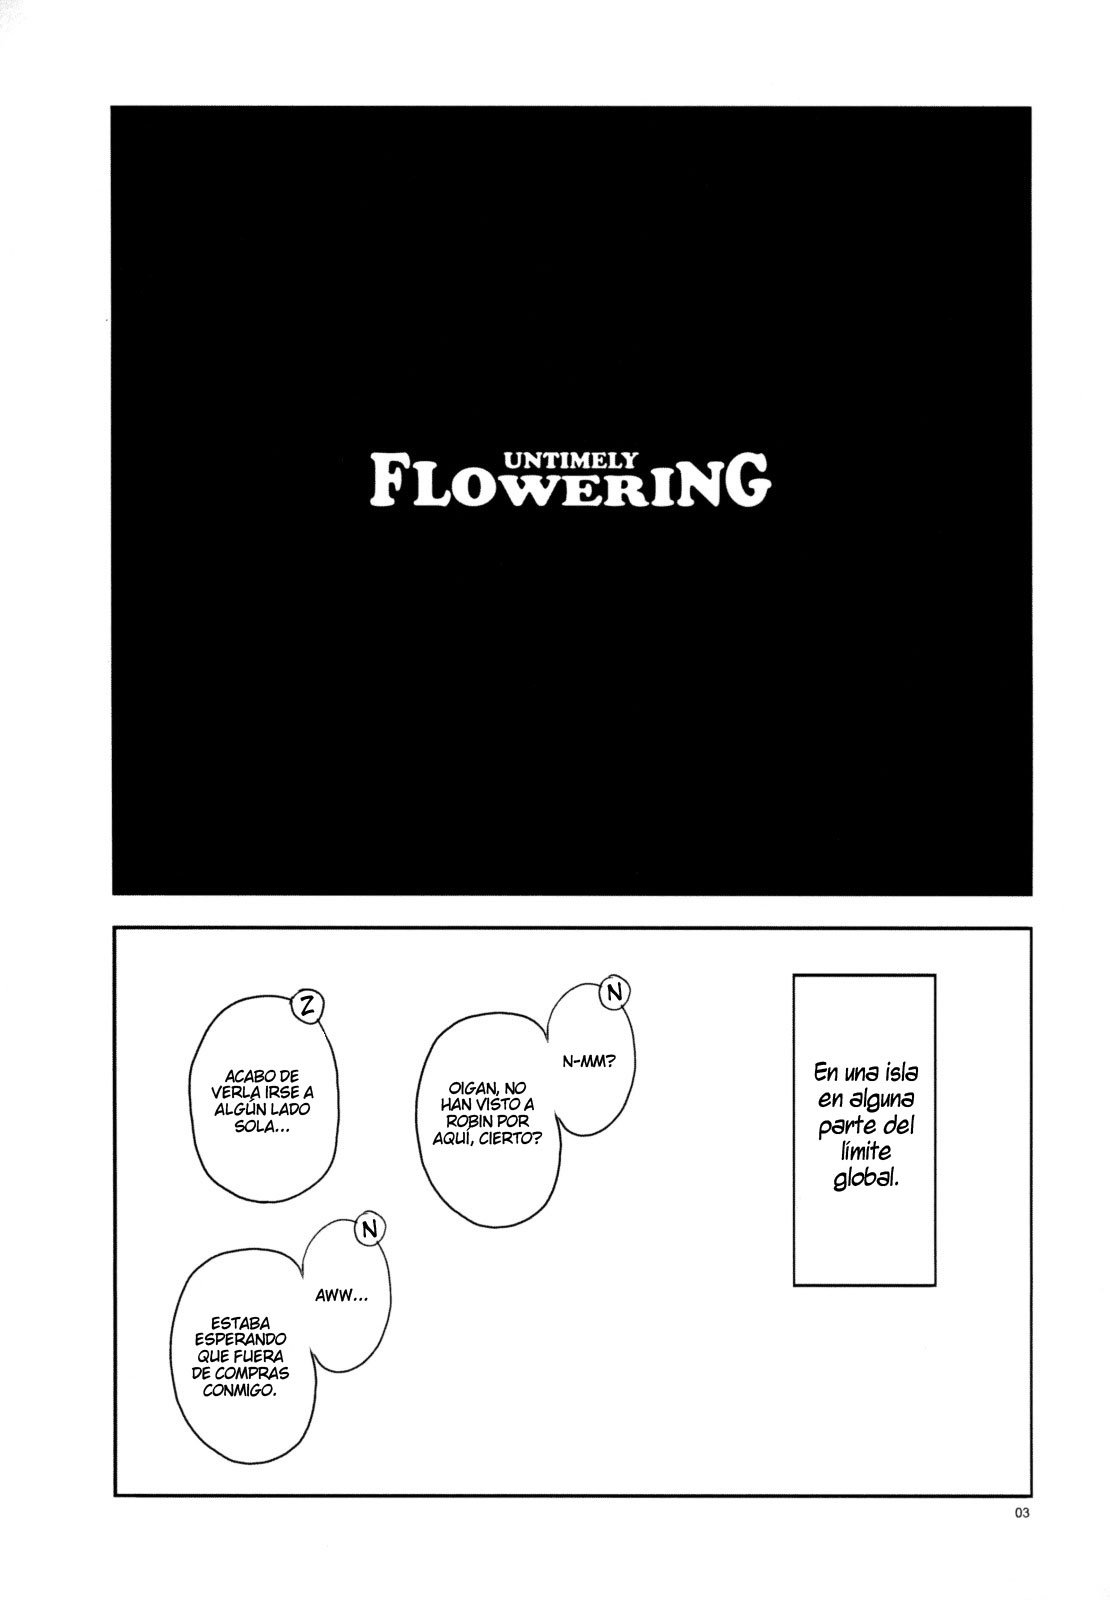 Untimely Flowering (One Piece) - Jun - 1